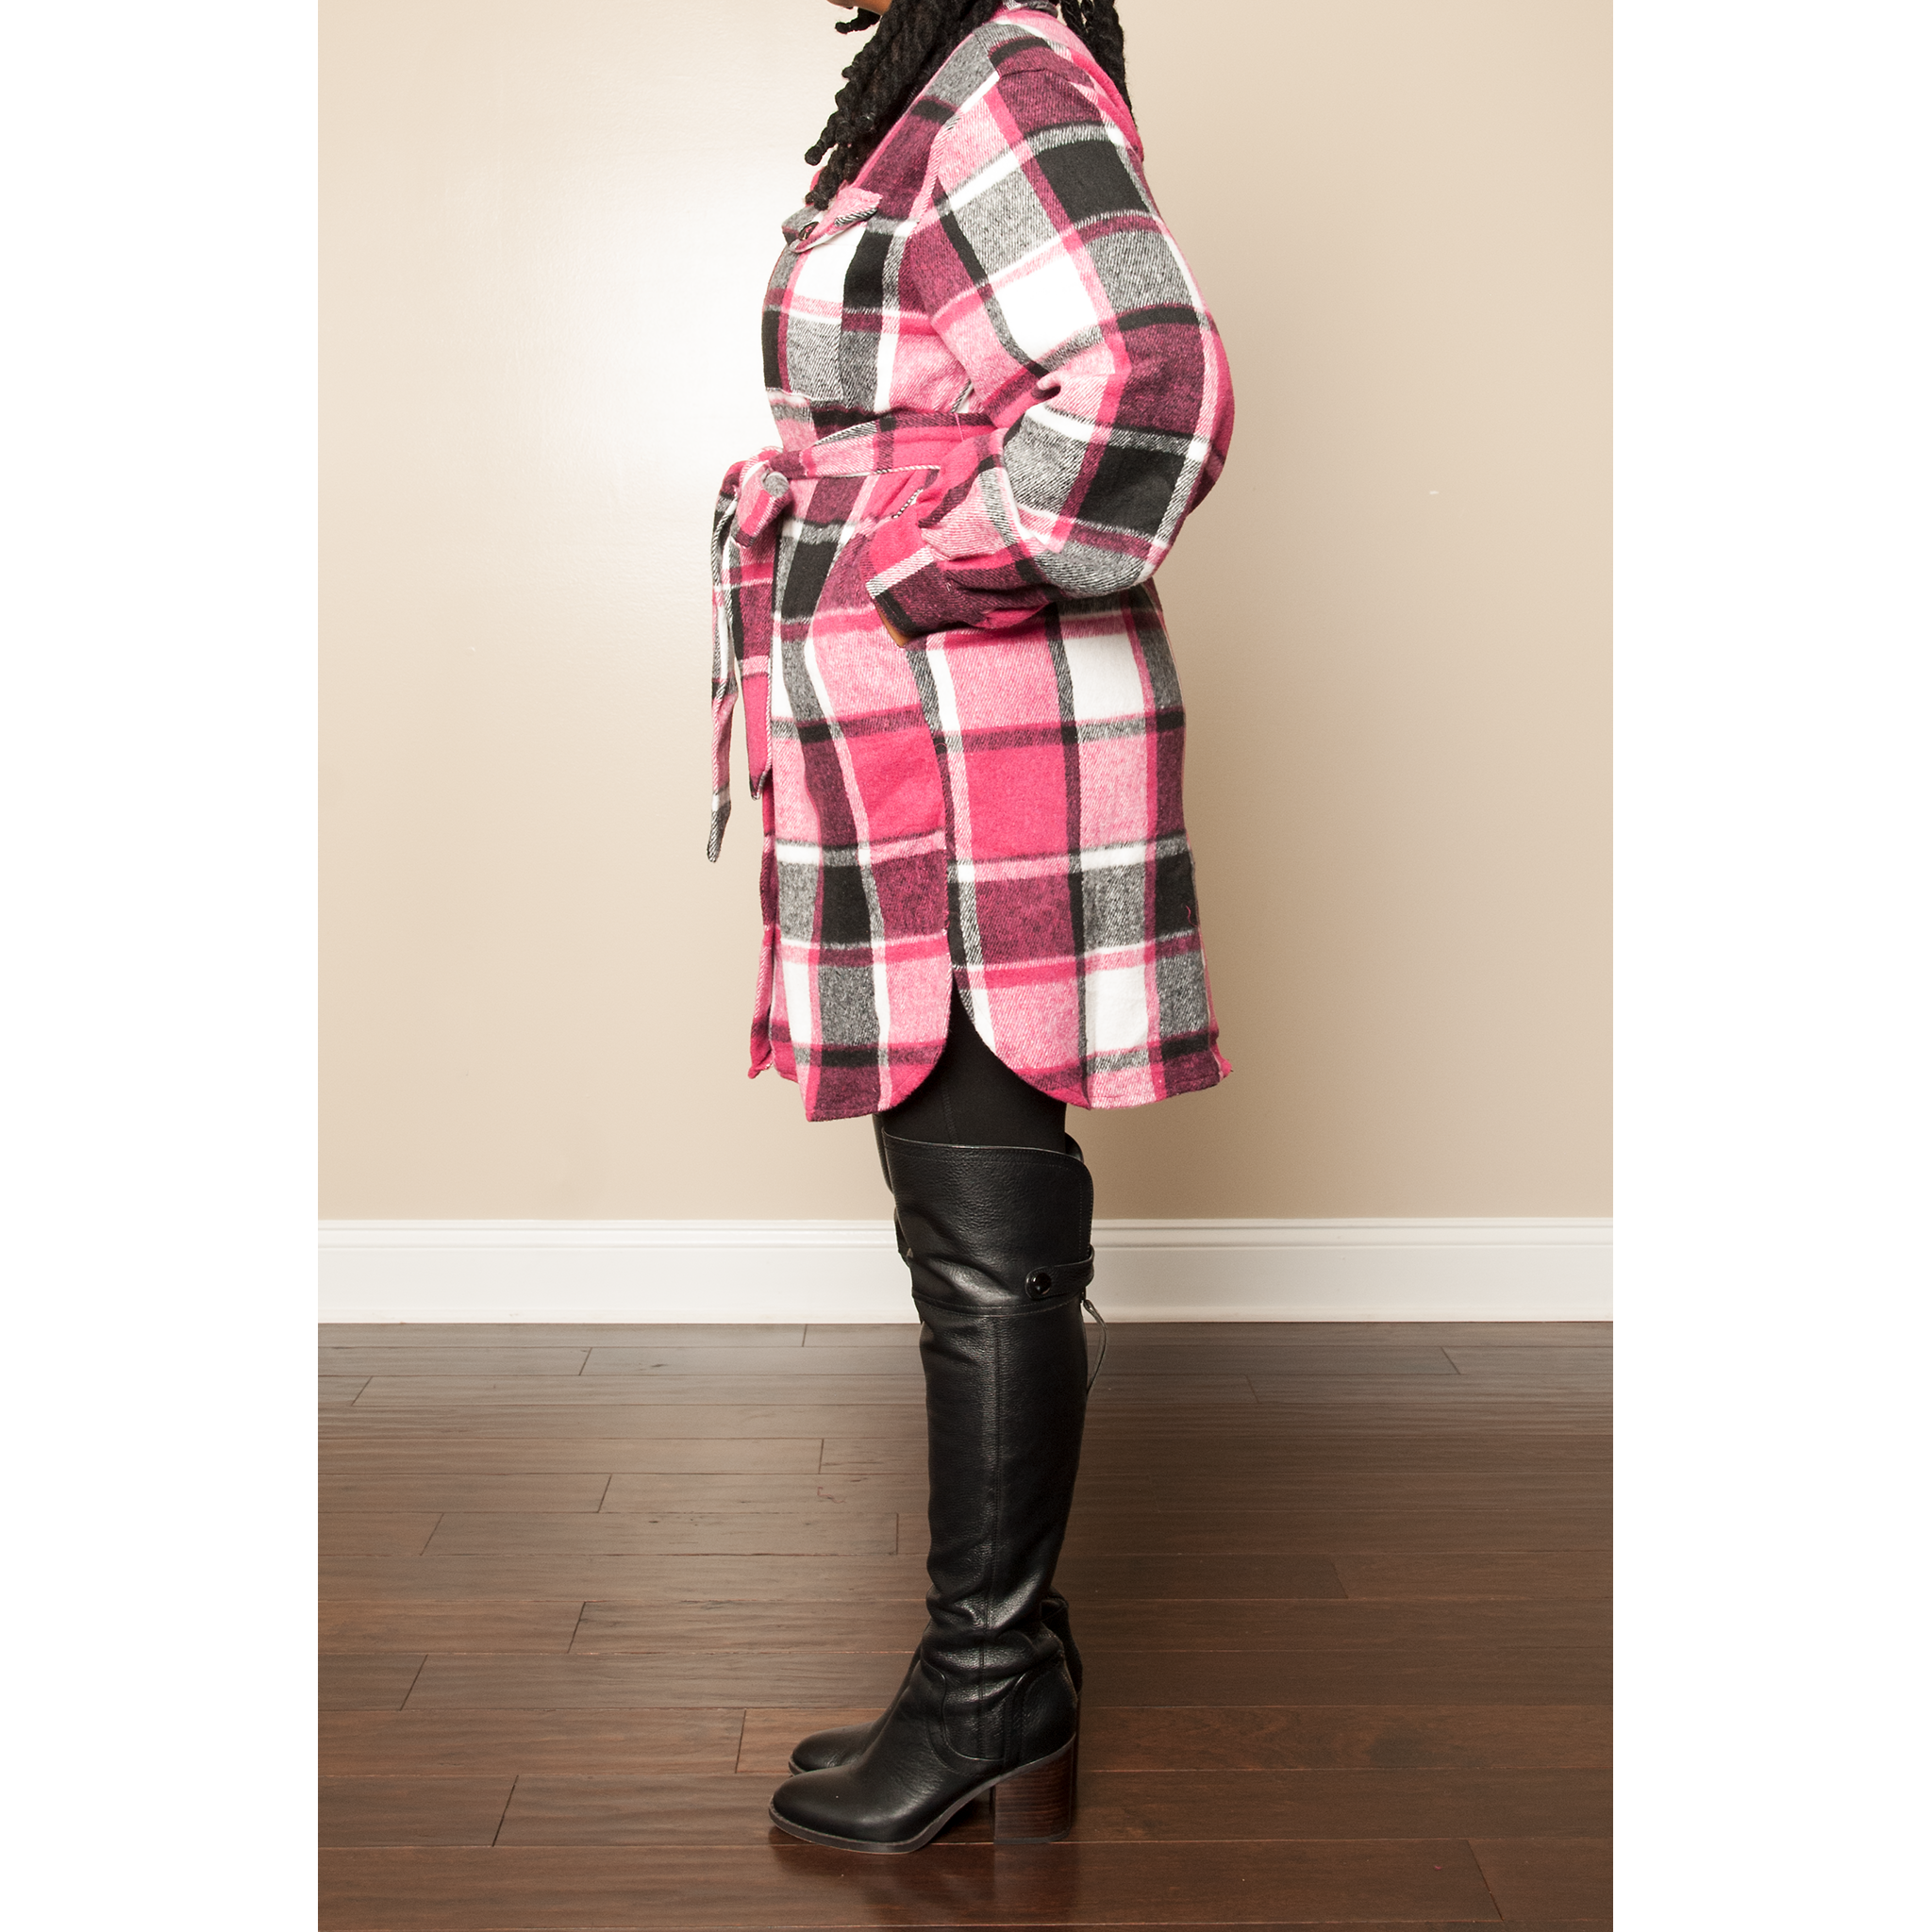 Magenta Plaid Coat Dress – The Stylish Woman Boutique